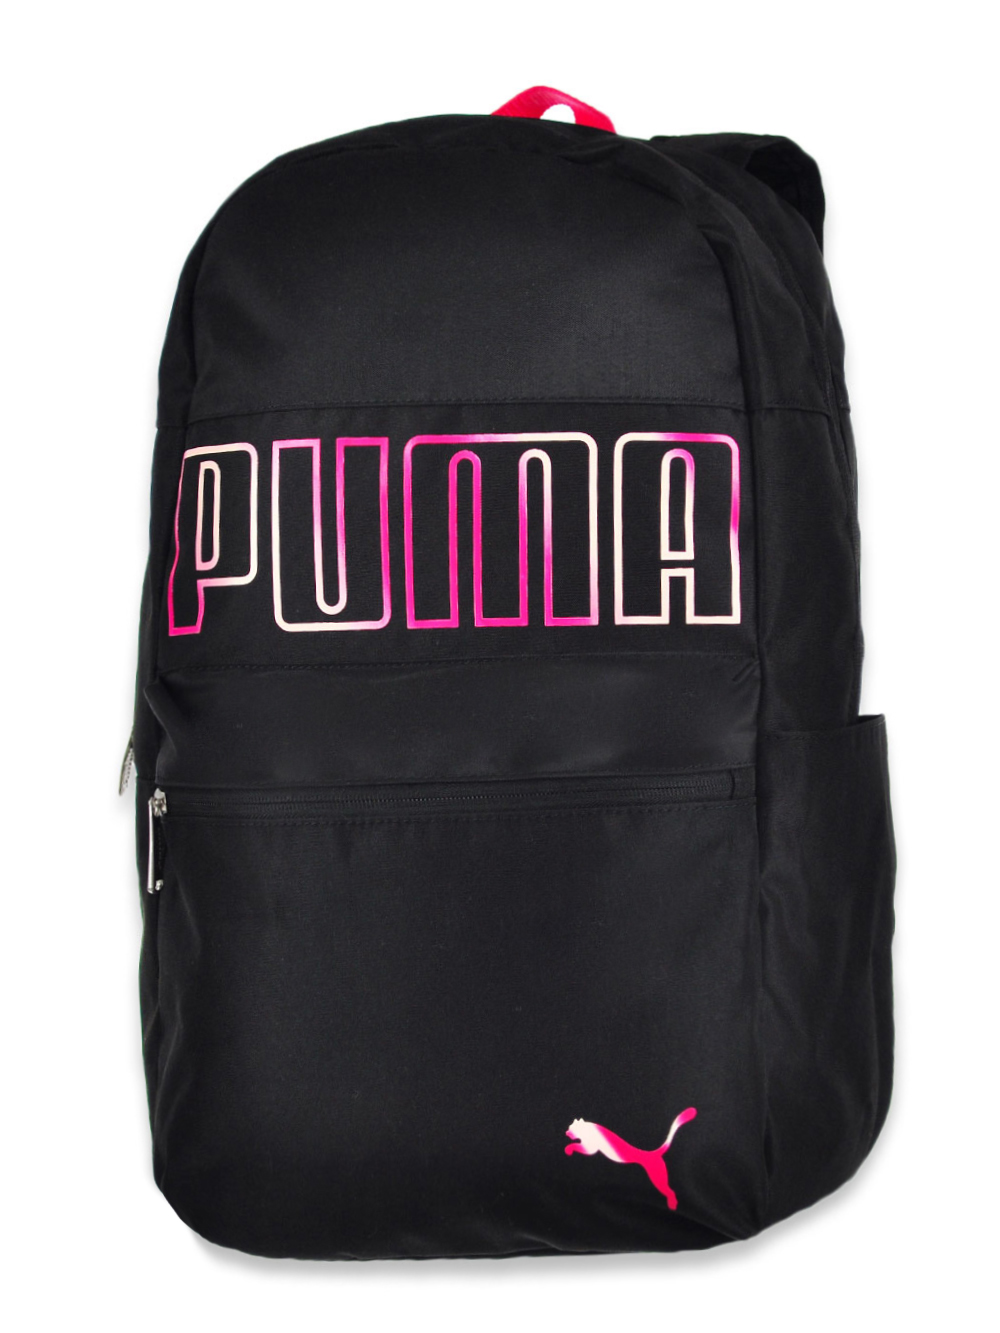 puma backpack for girls